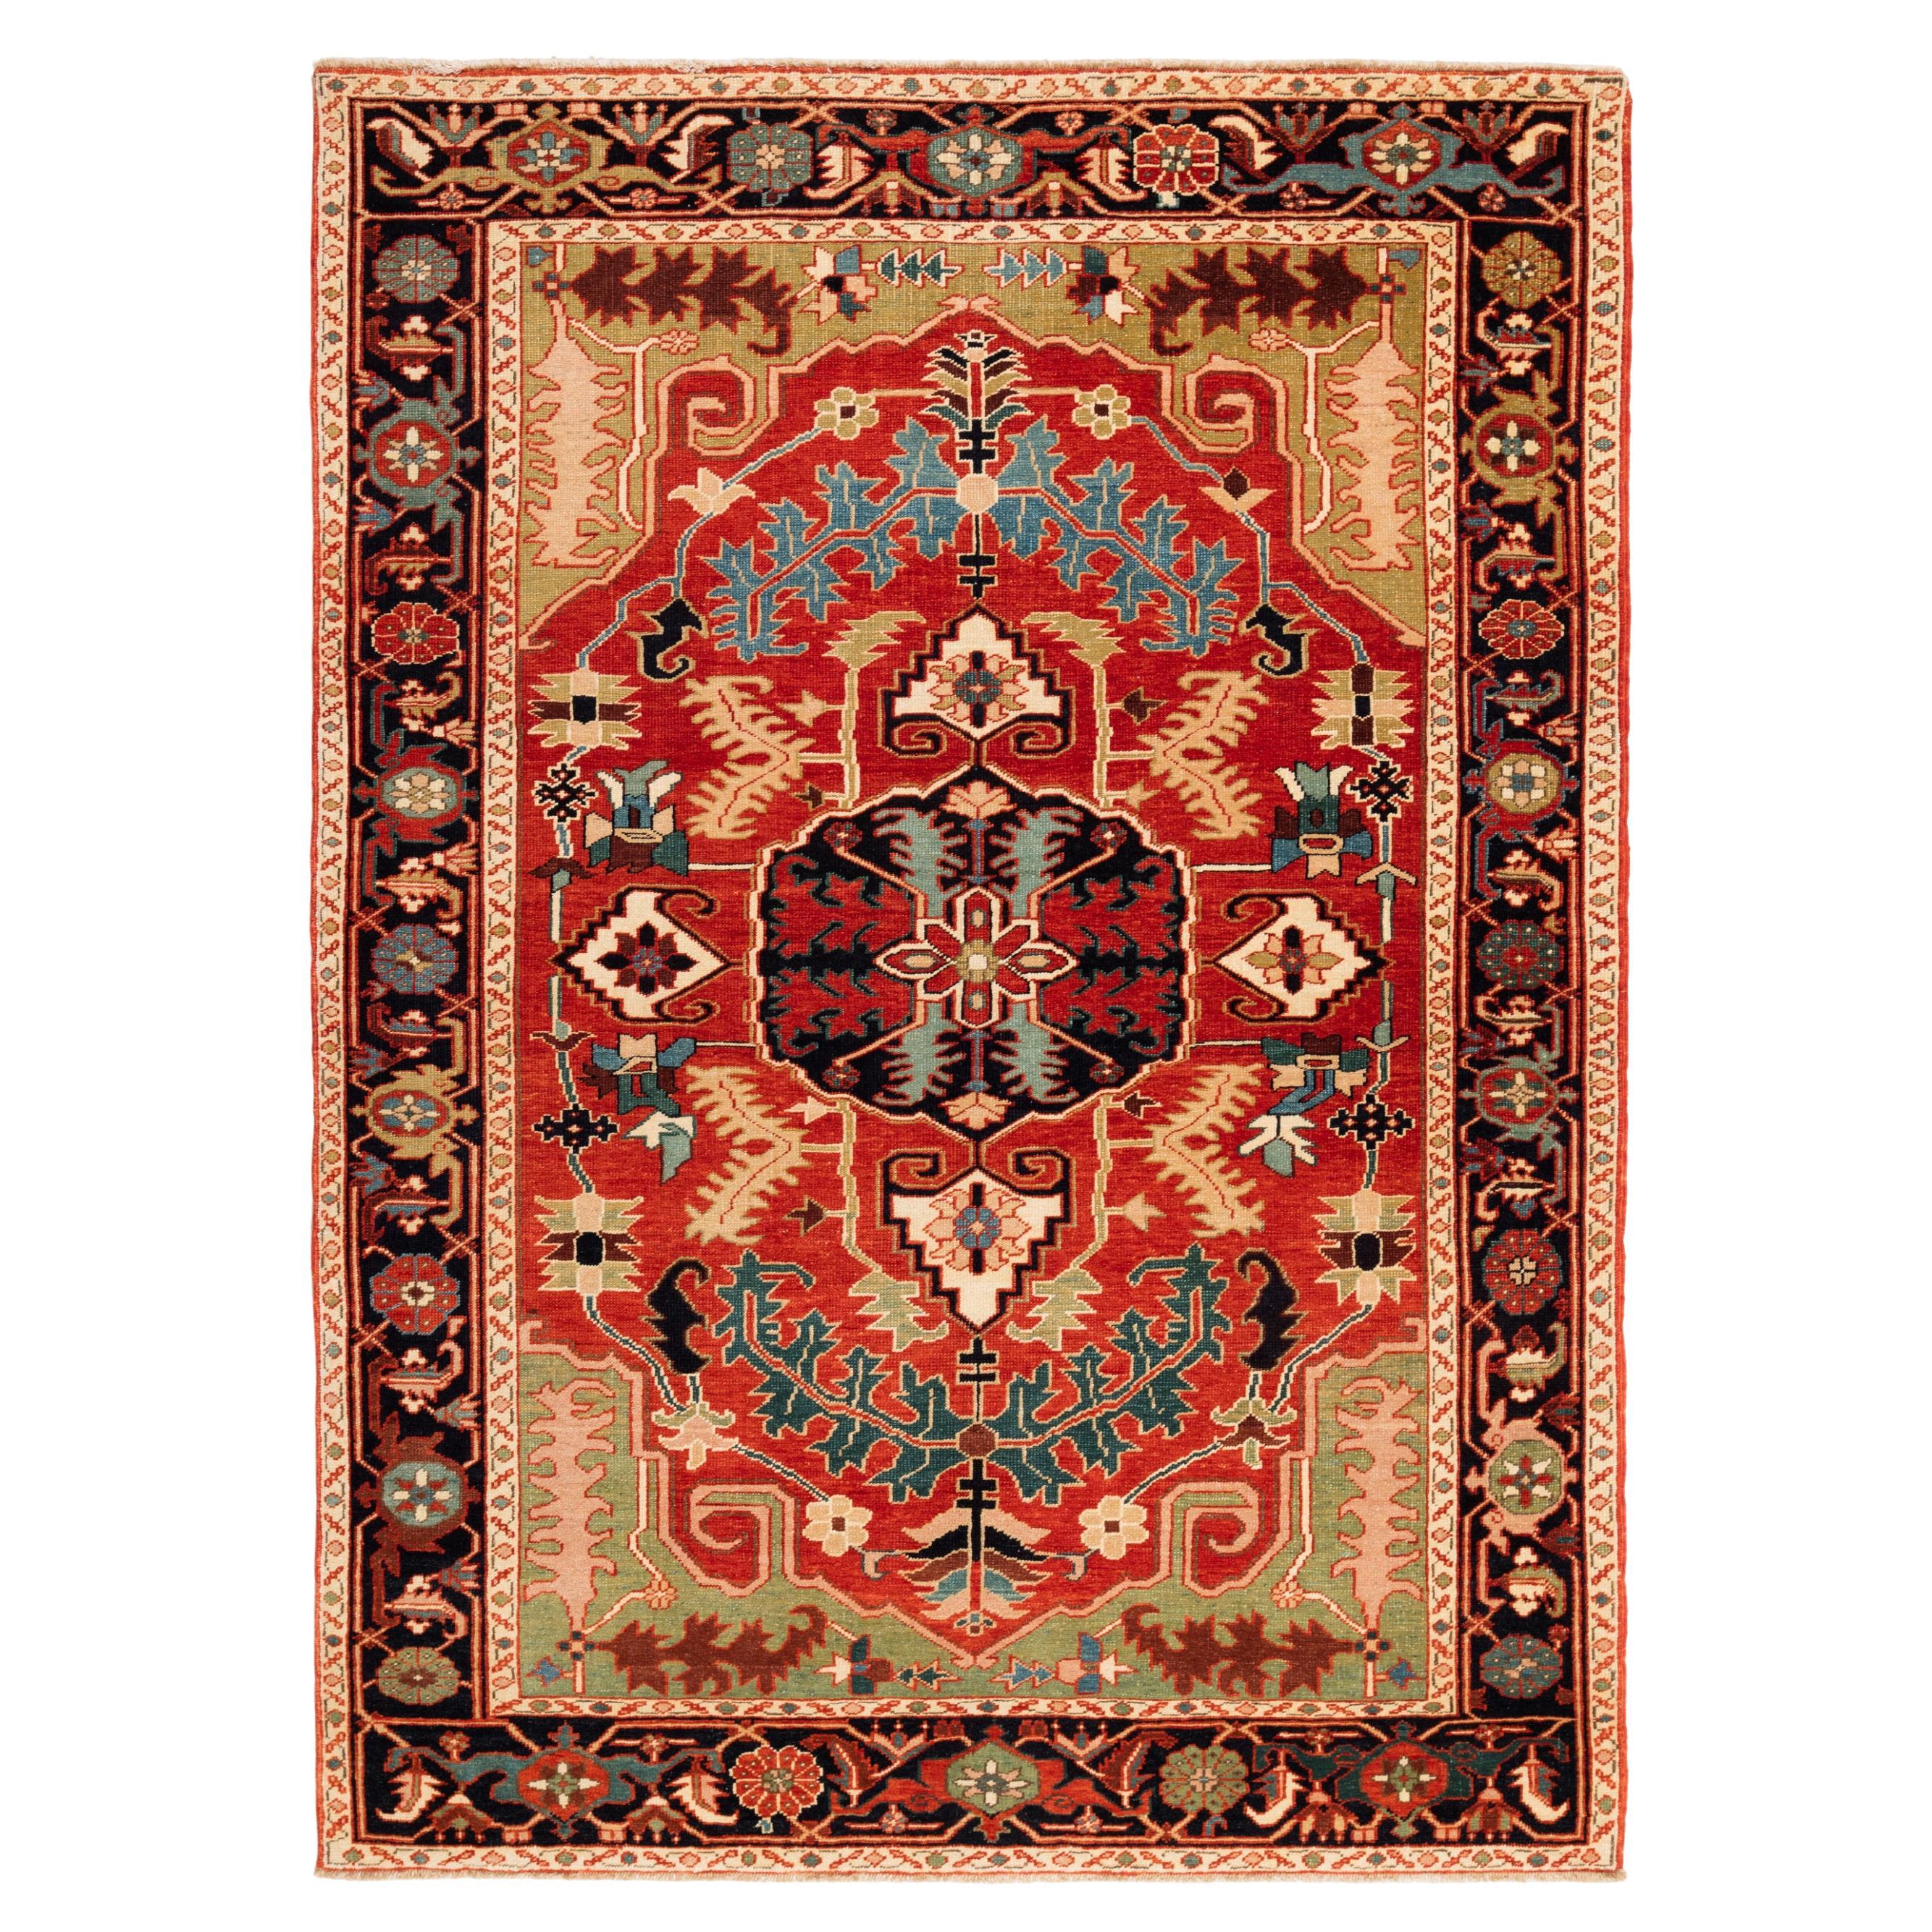 Ararat Rugs Heriz Medallion Rug 19th Century Persian Revival Carpet Natural Dyed For Sale